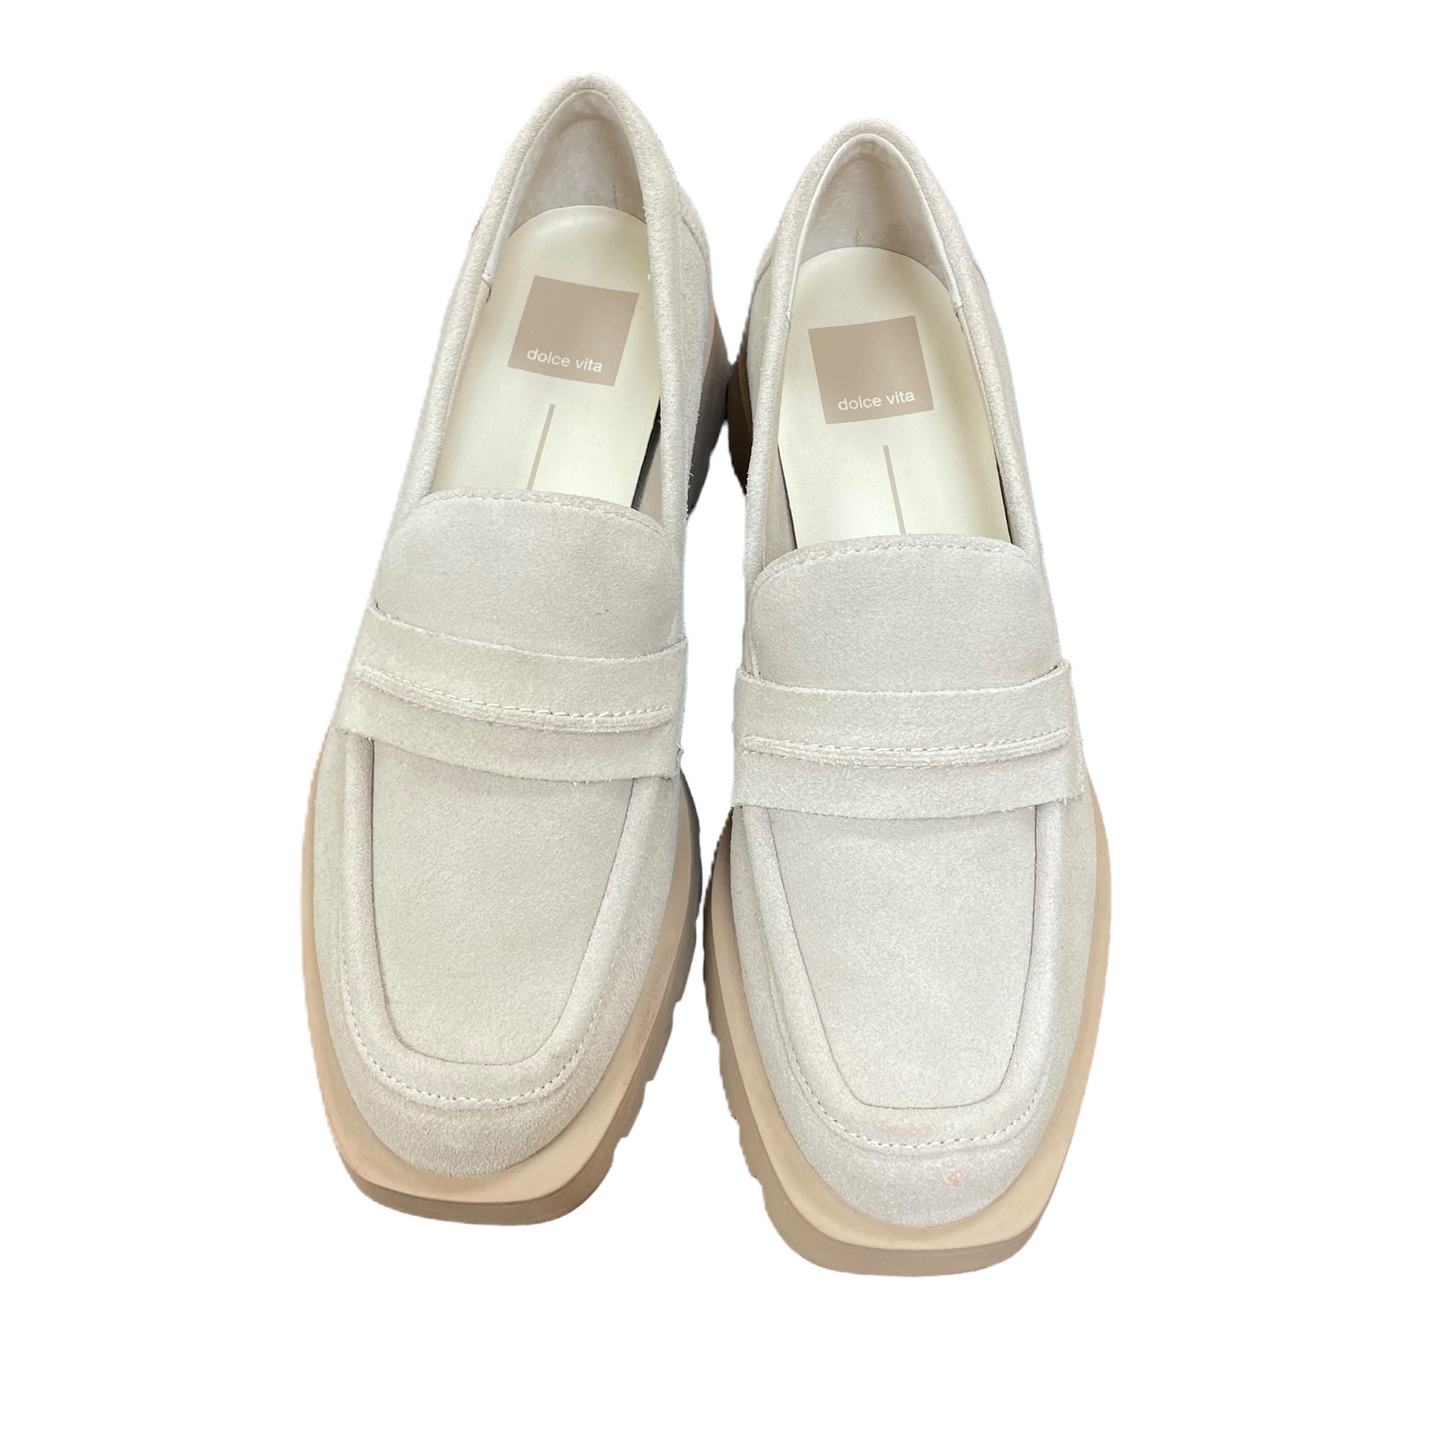 Tan Shoes Flats By Dolce Vita, Size: 7.5